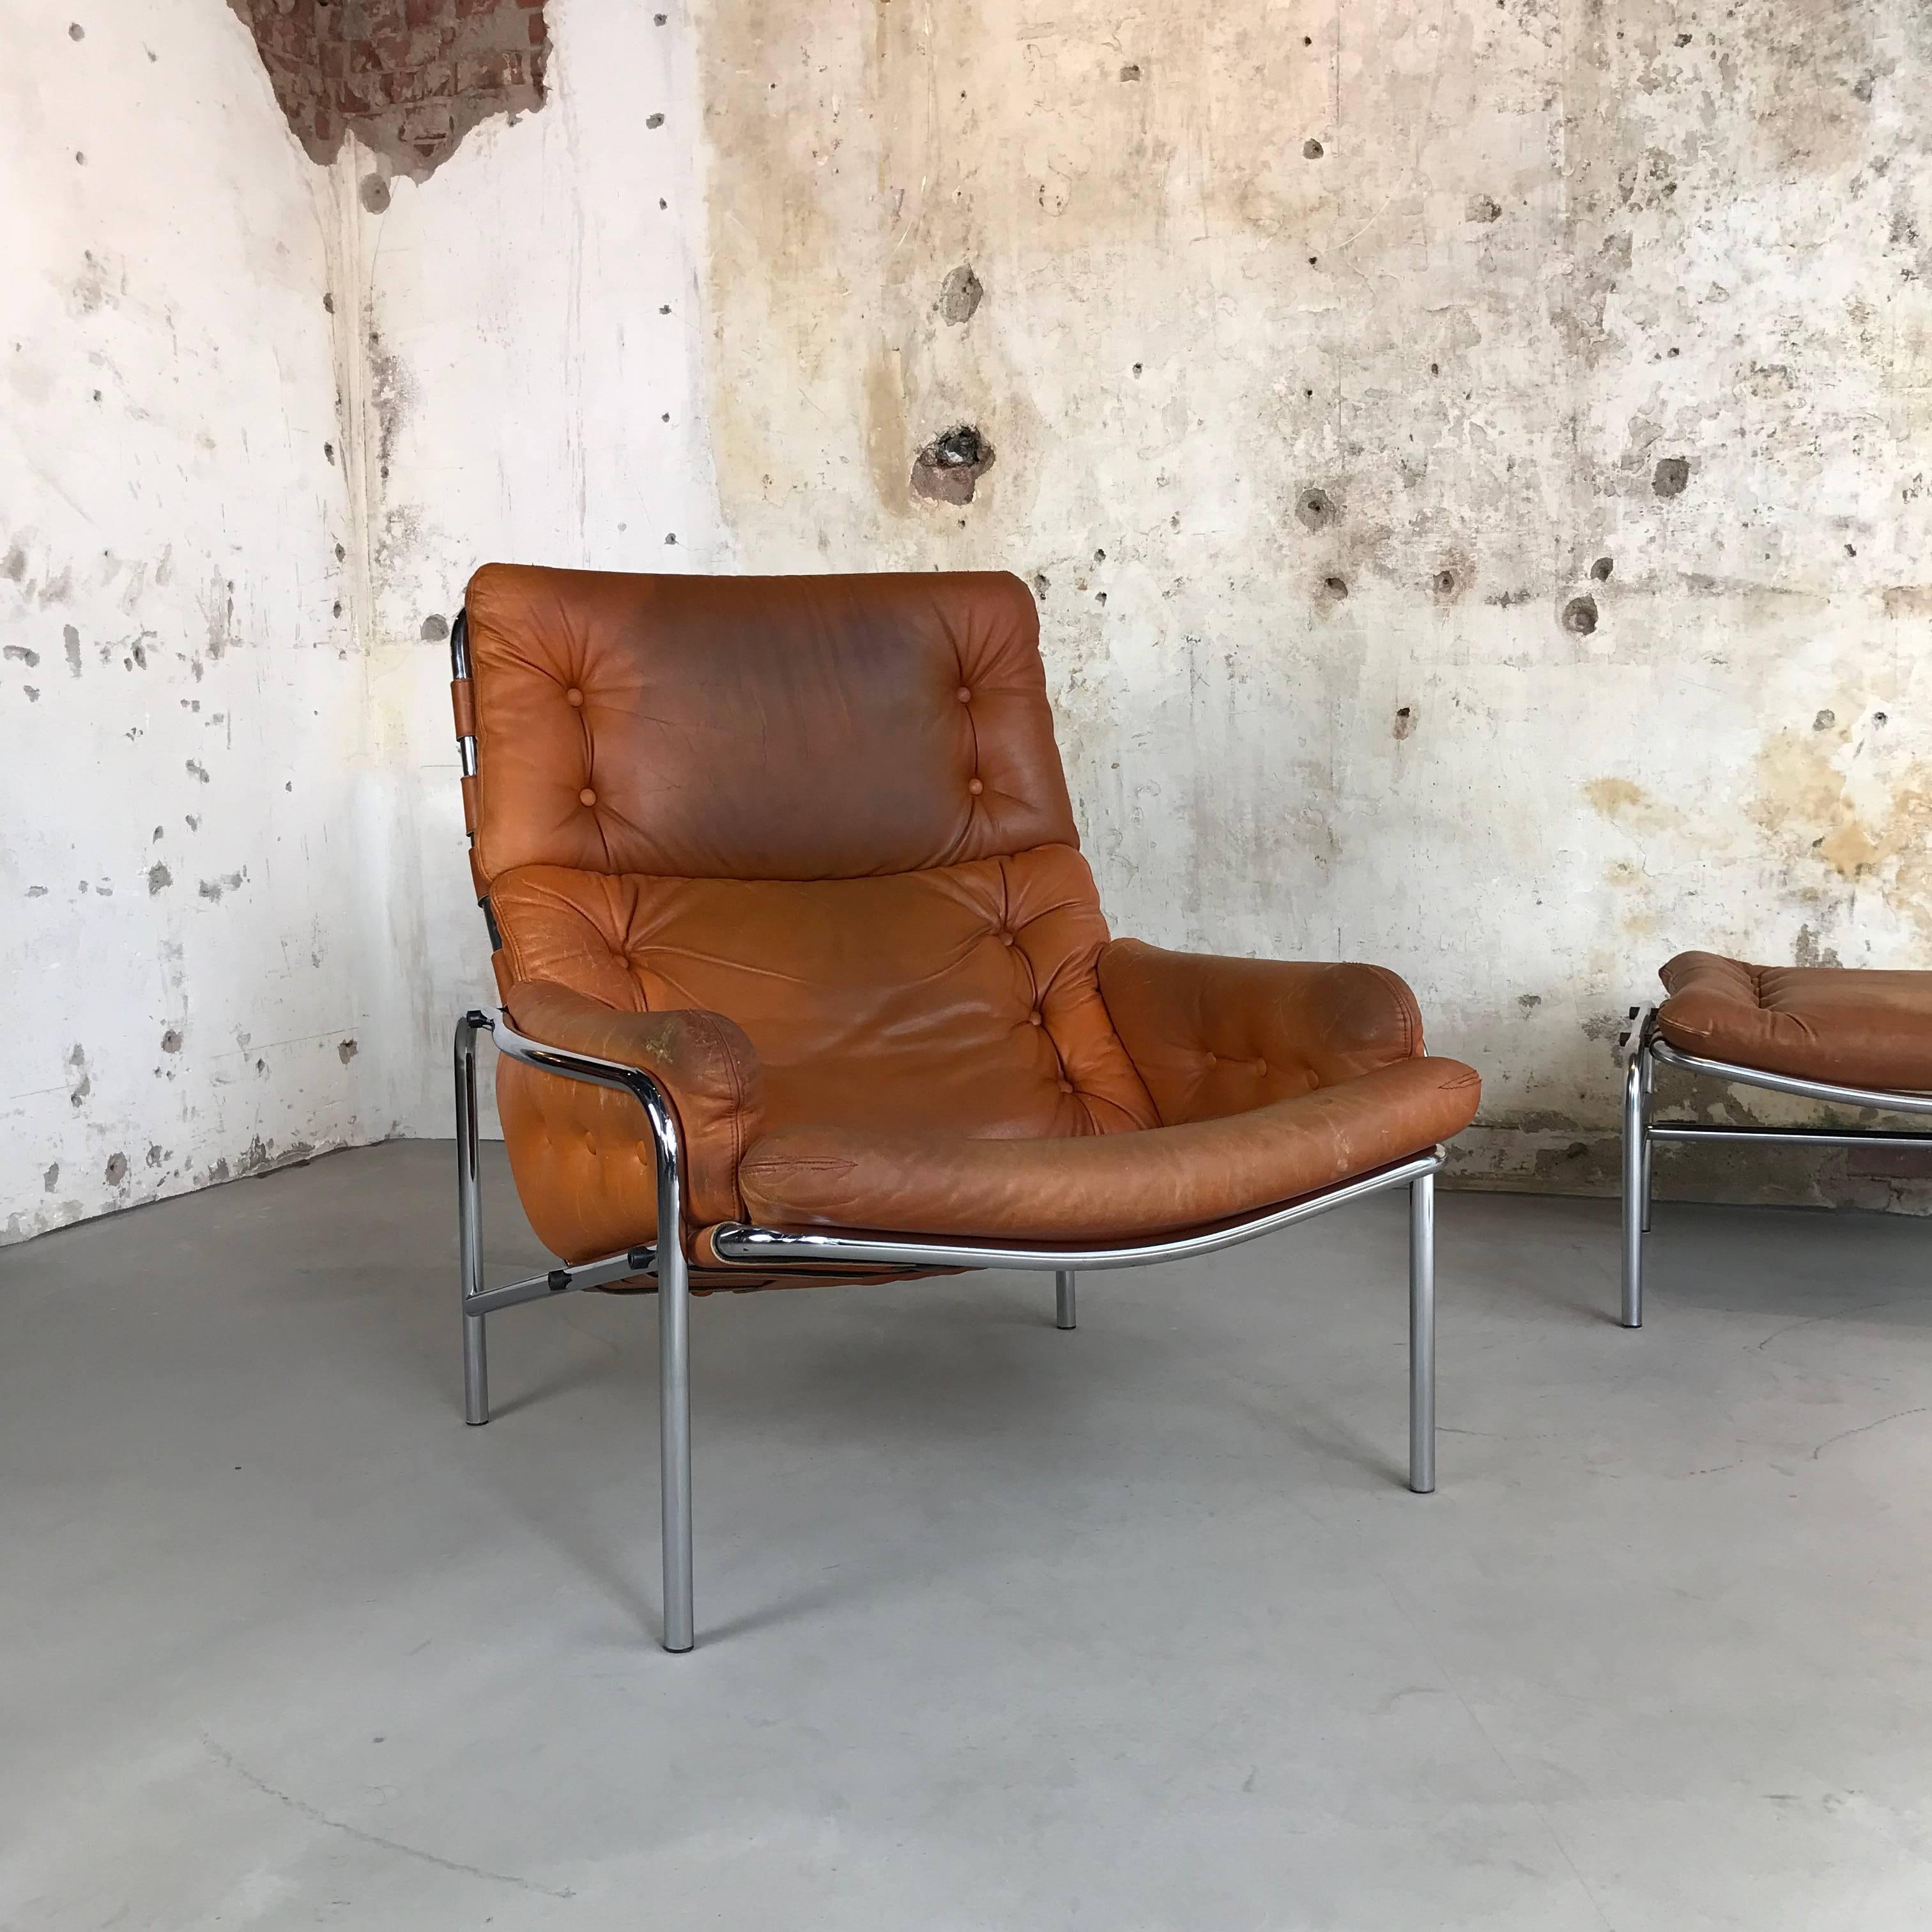 Dutch 1970s Lounge Chair Plus Ottoman SZ09 Nagoya by Martin Visser for Spectrum